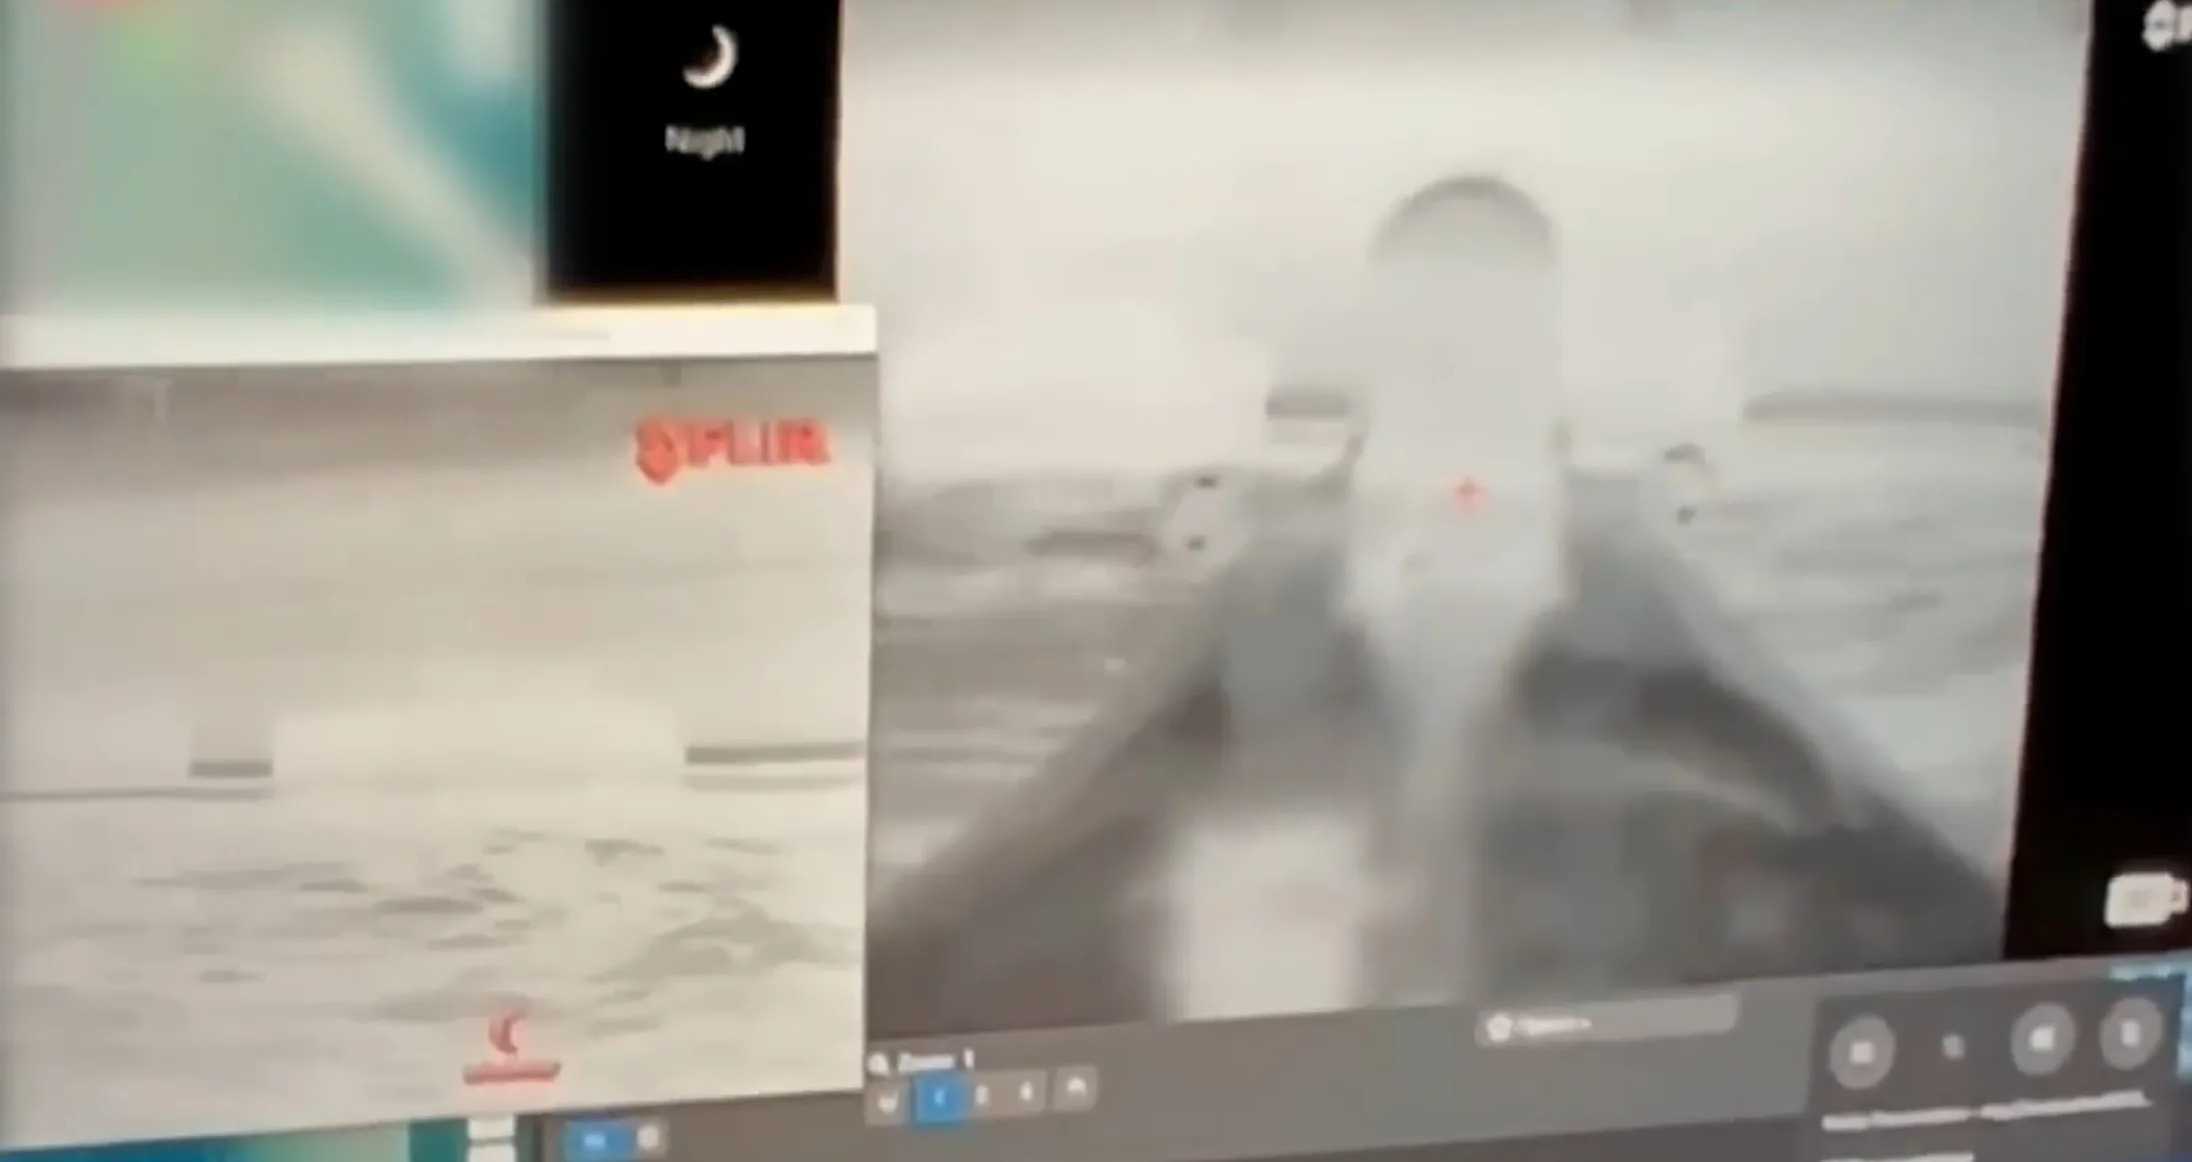 Ukraine used an experimental kamikaze drone to blast the bridge